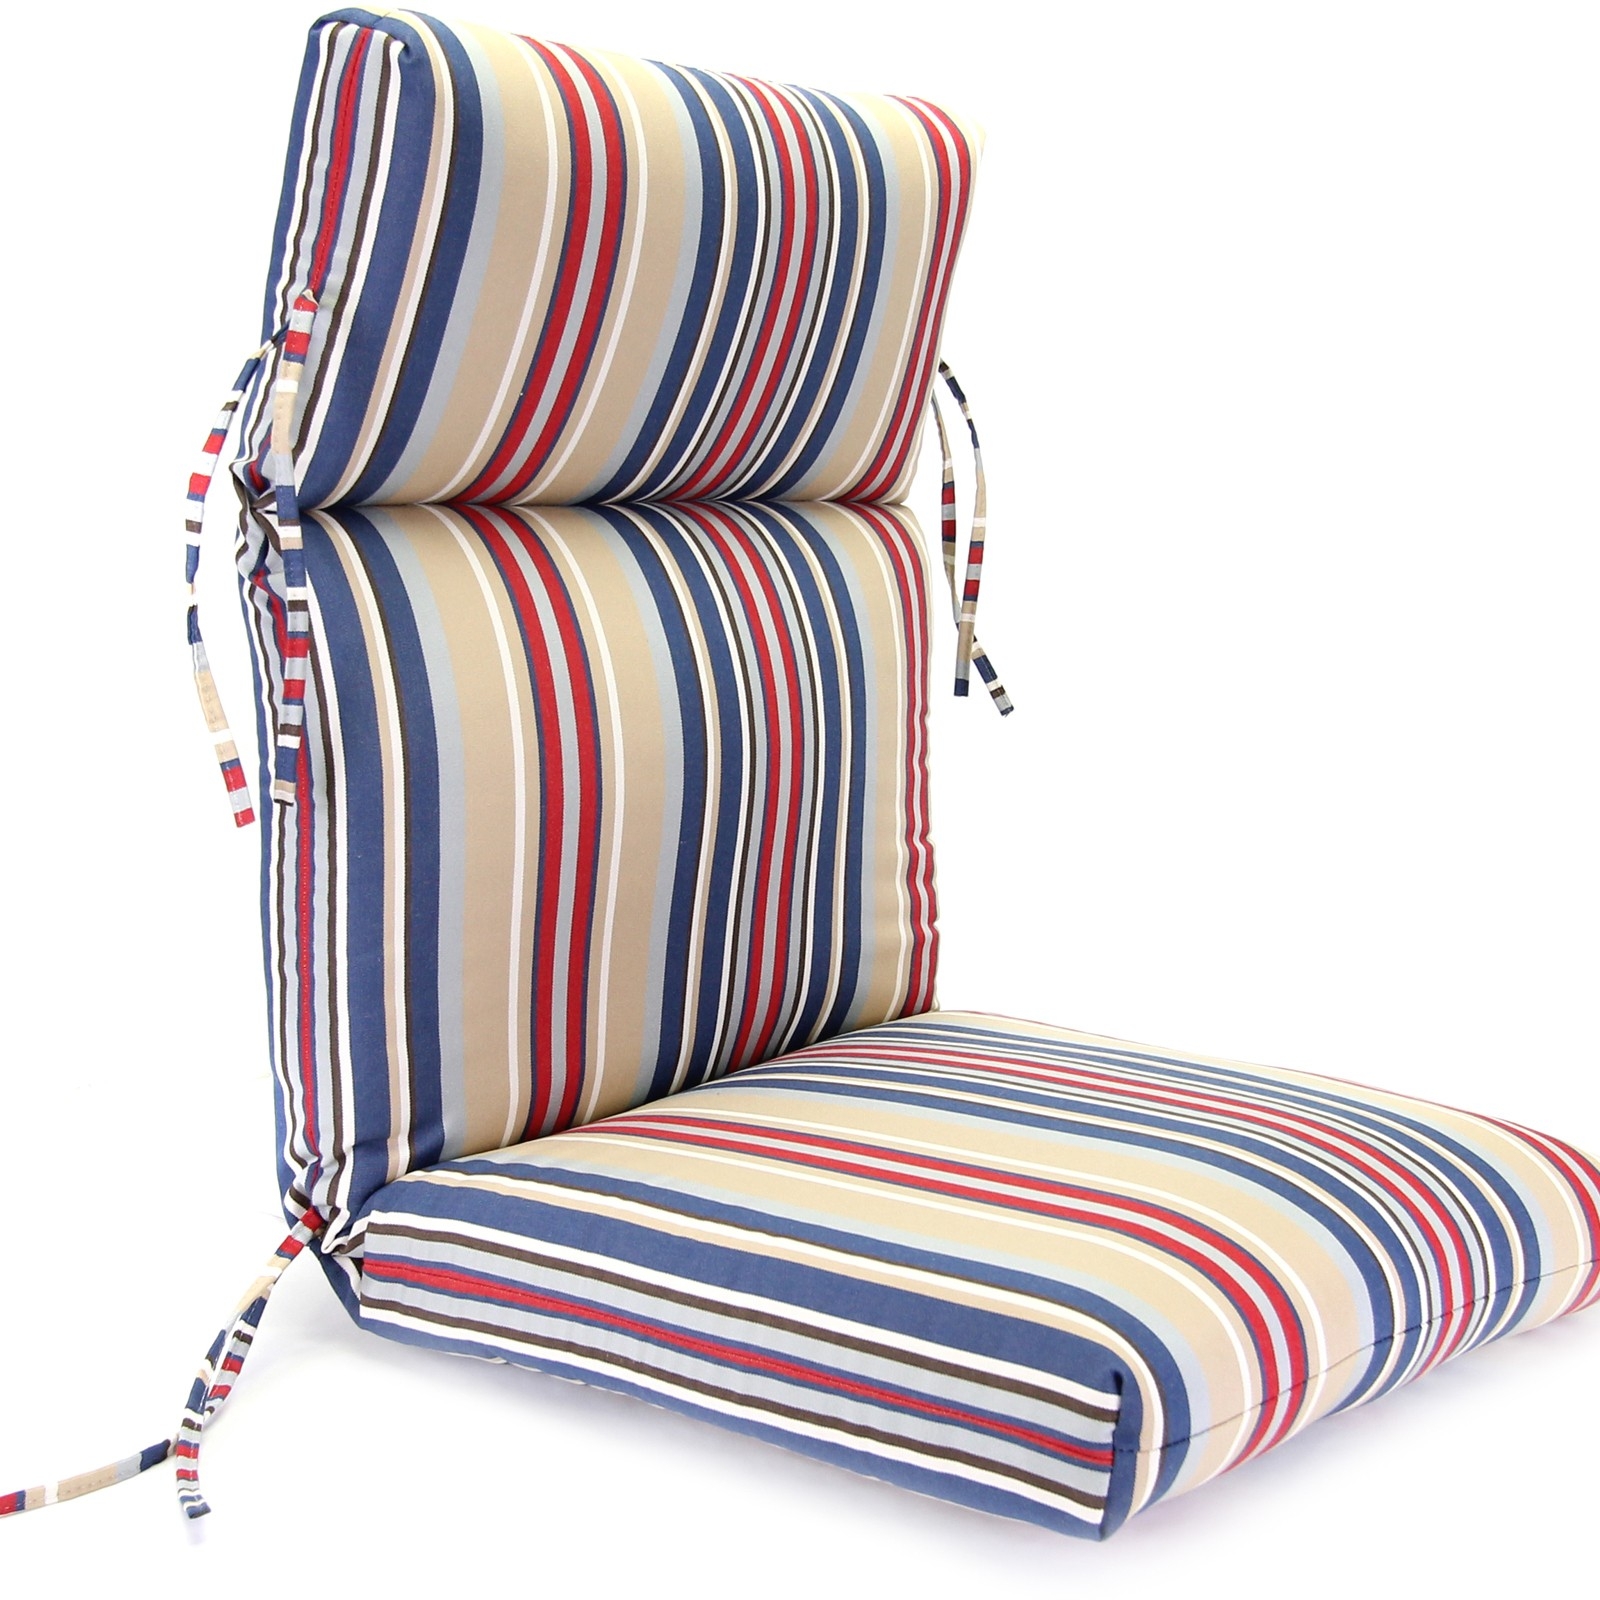 Wendin Indoor/Outdoor Seat Cushion Charlton Home Fabric: Linen